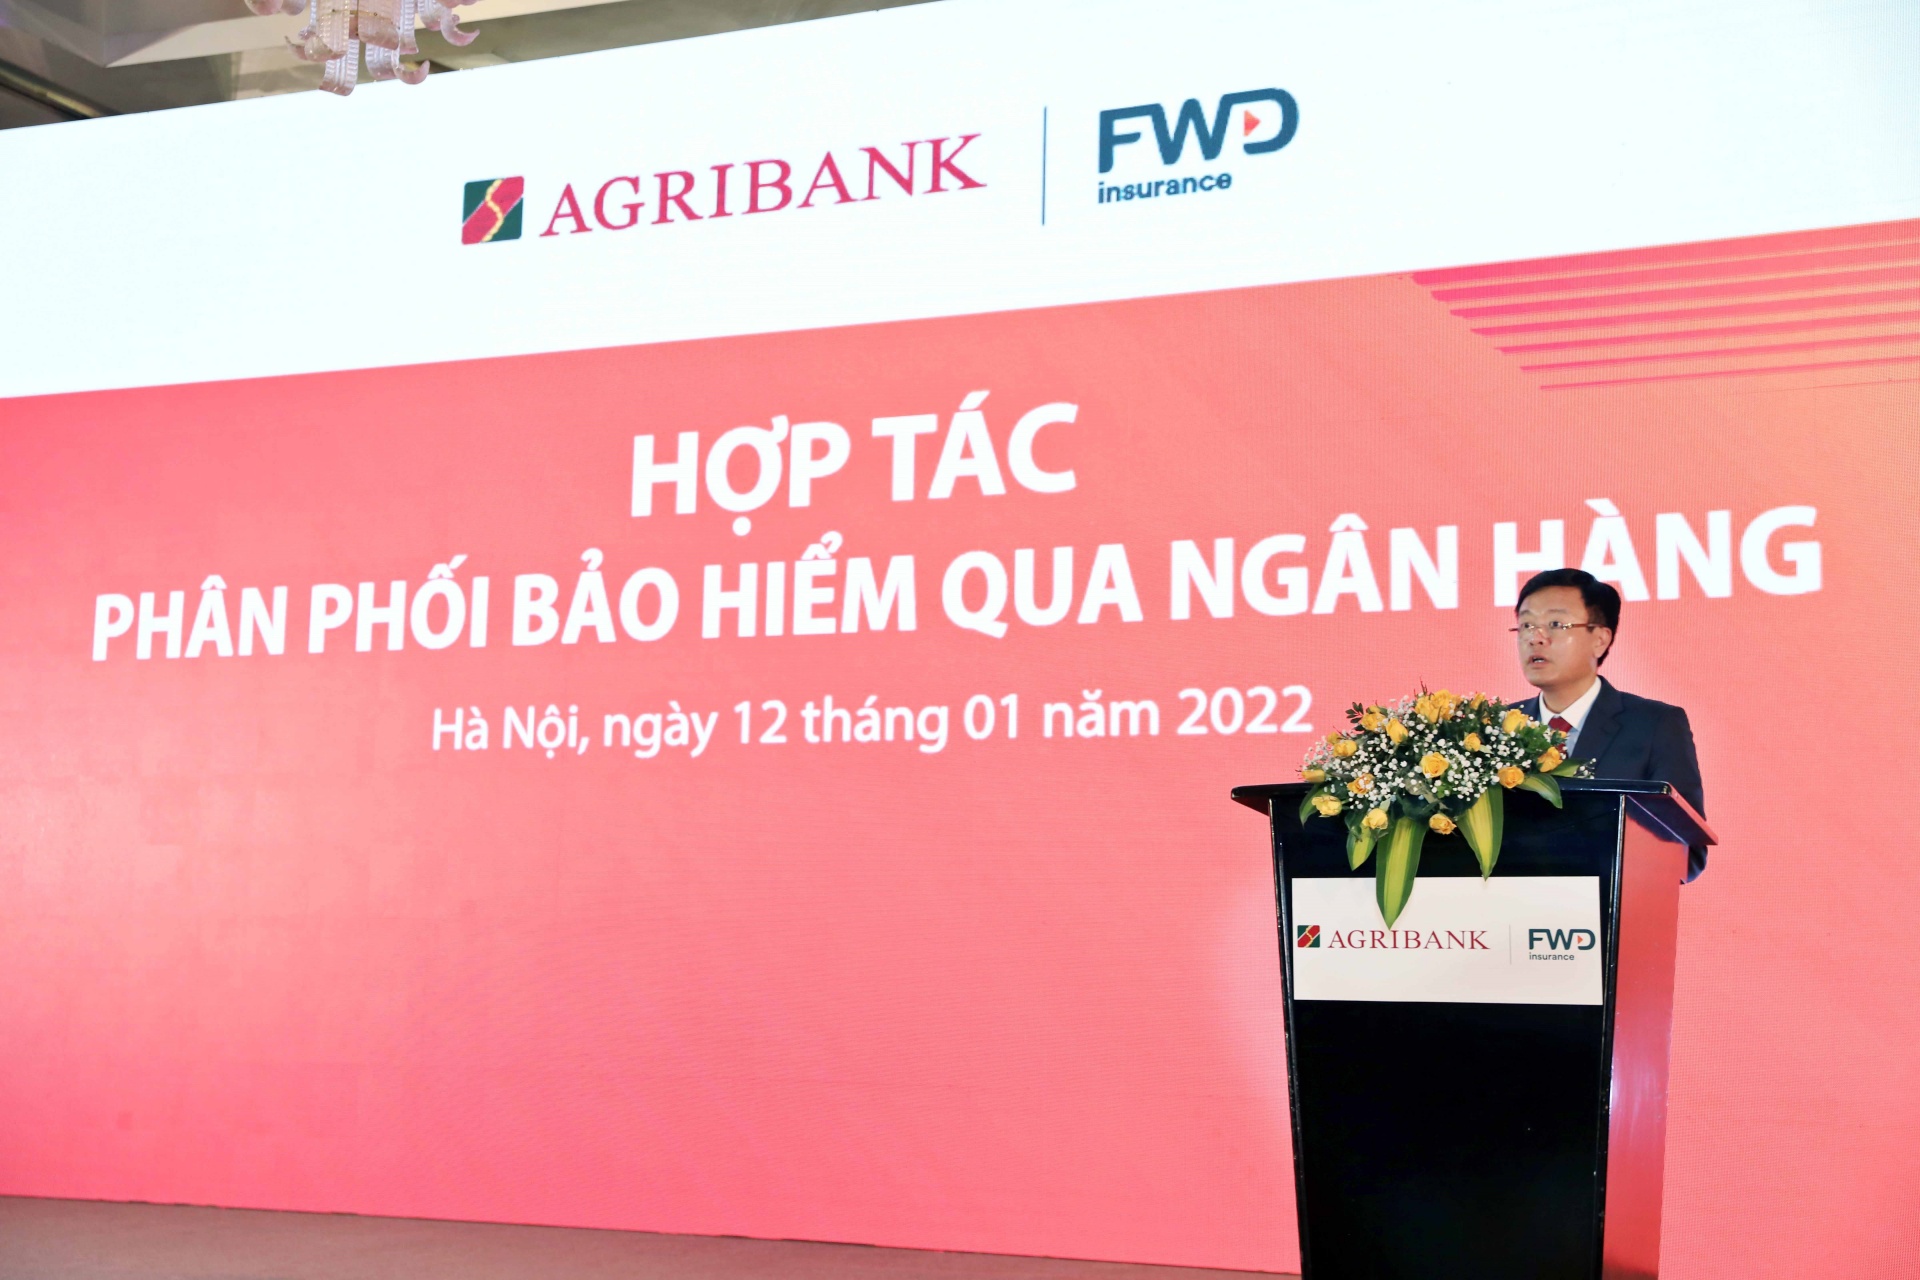 Agribank and FWD Vietnam enter bancassurance partnership